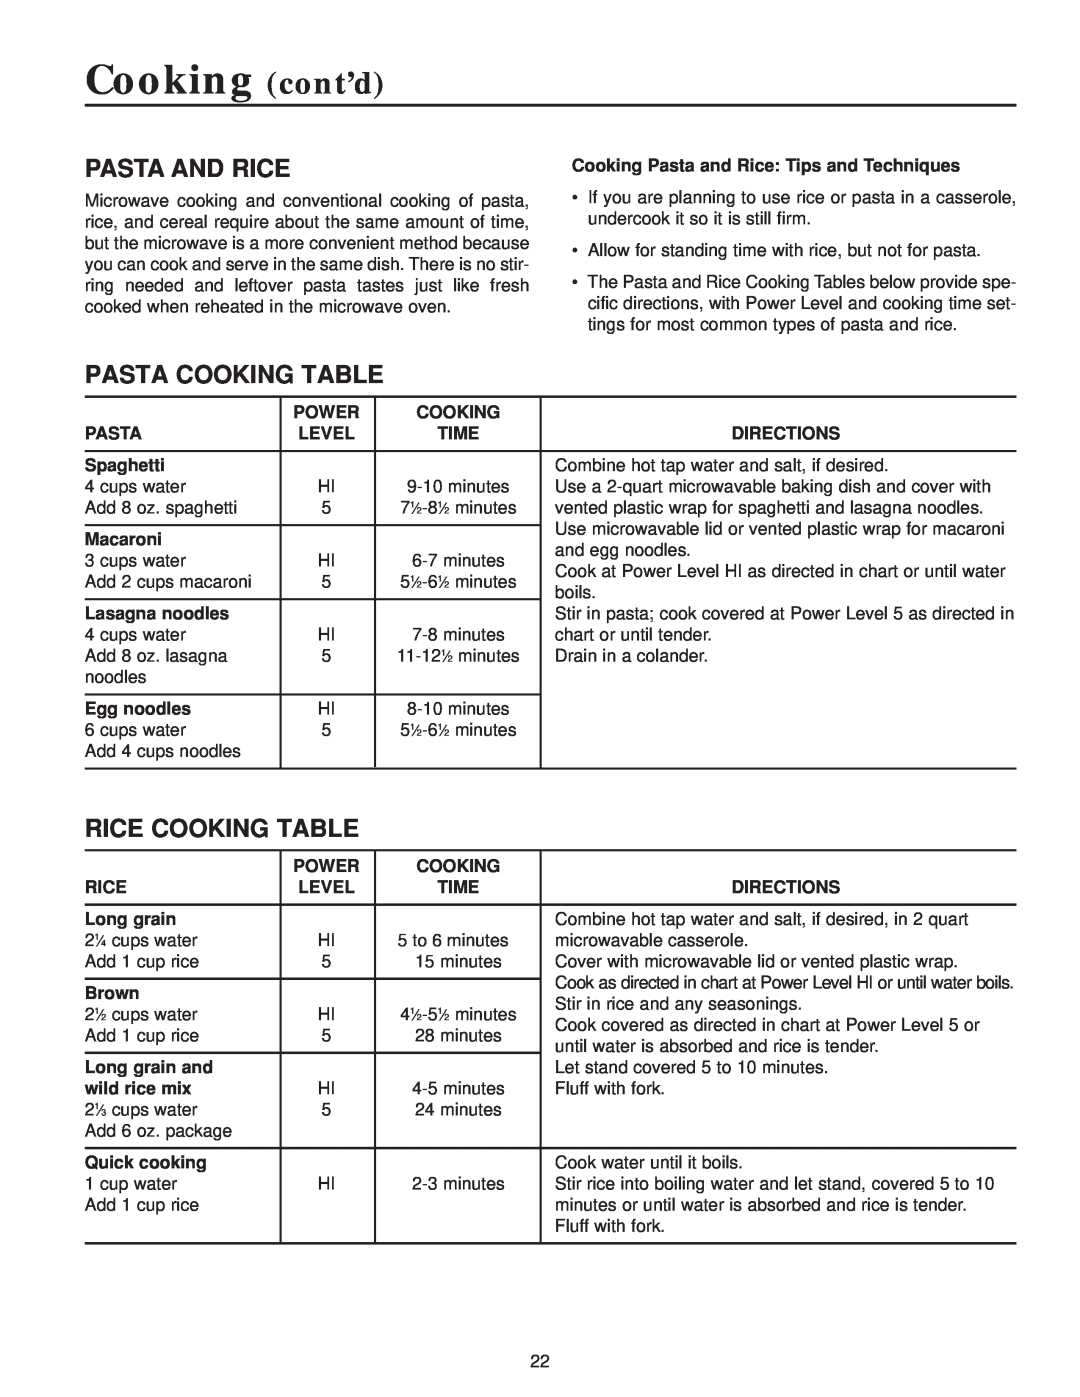 Maytag MMV4184AA owner manual Pasta And Rice, Pasta Cooking Table, Rice Cooking Table, Cooking cont’d 